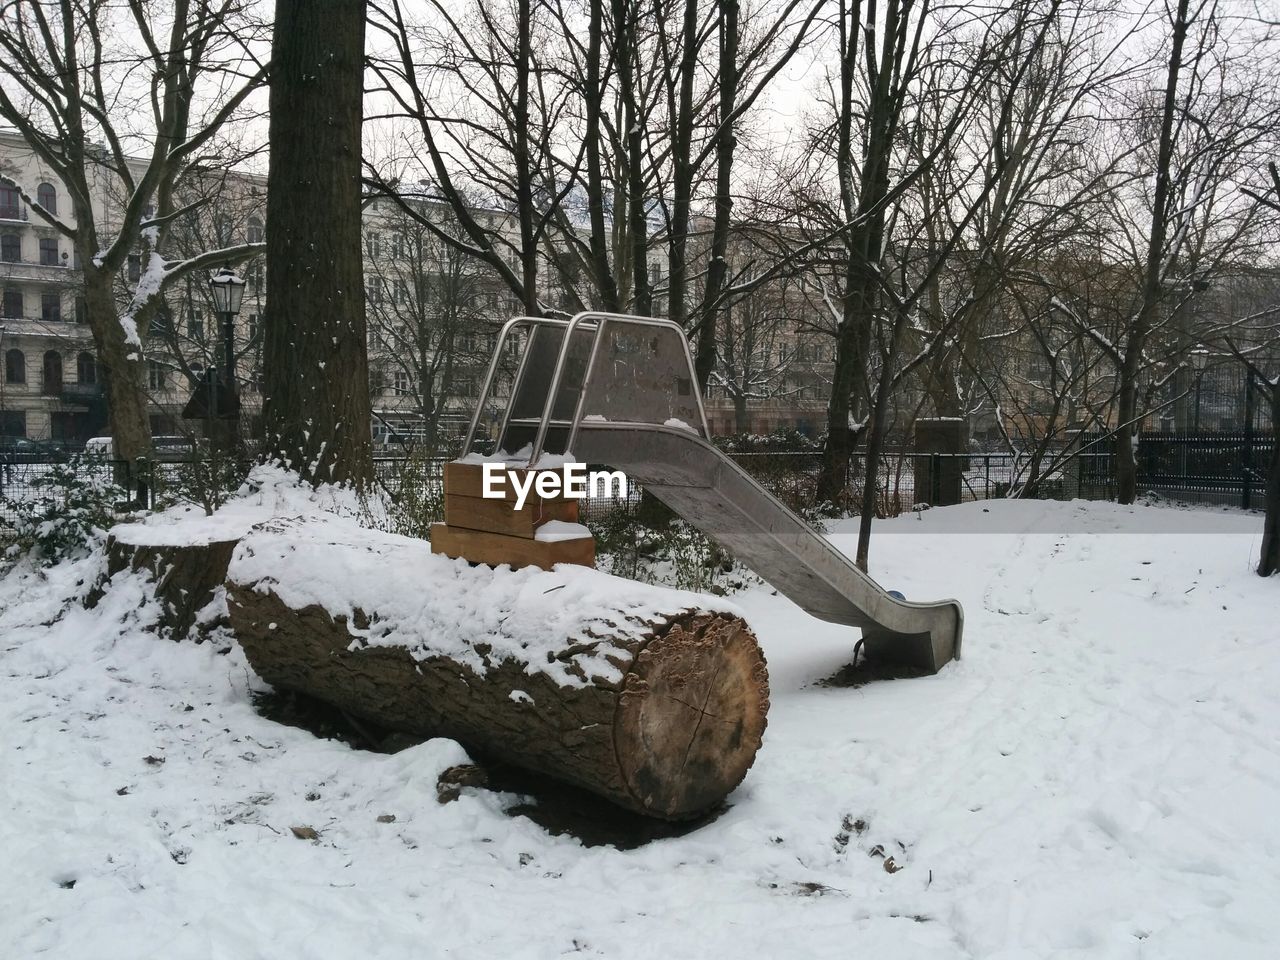 Log and slide in snowcapped park